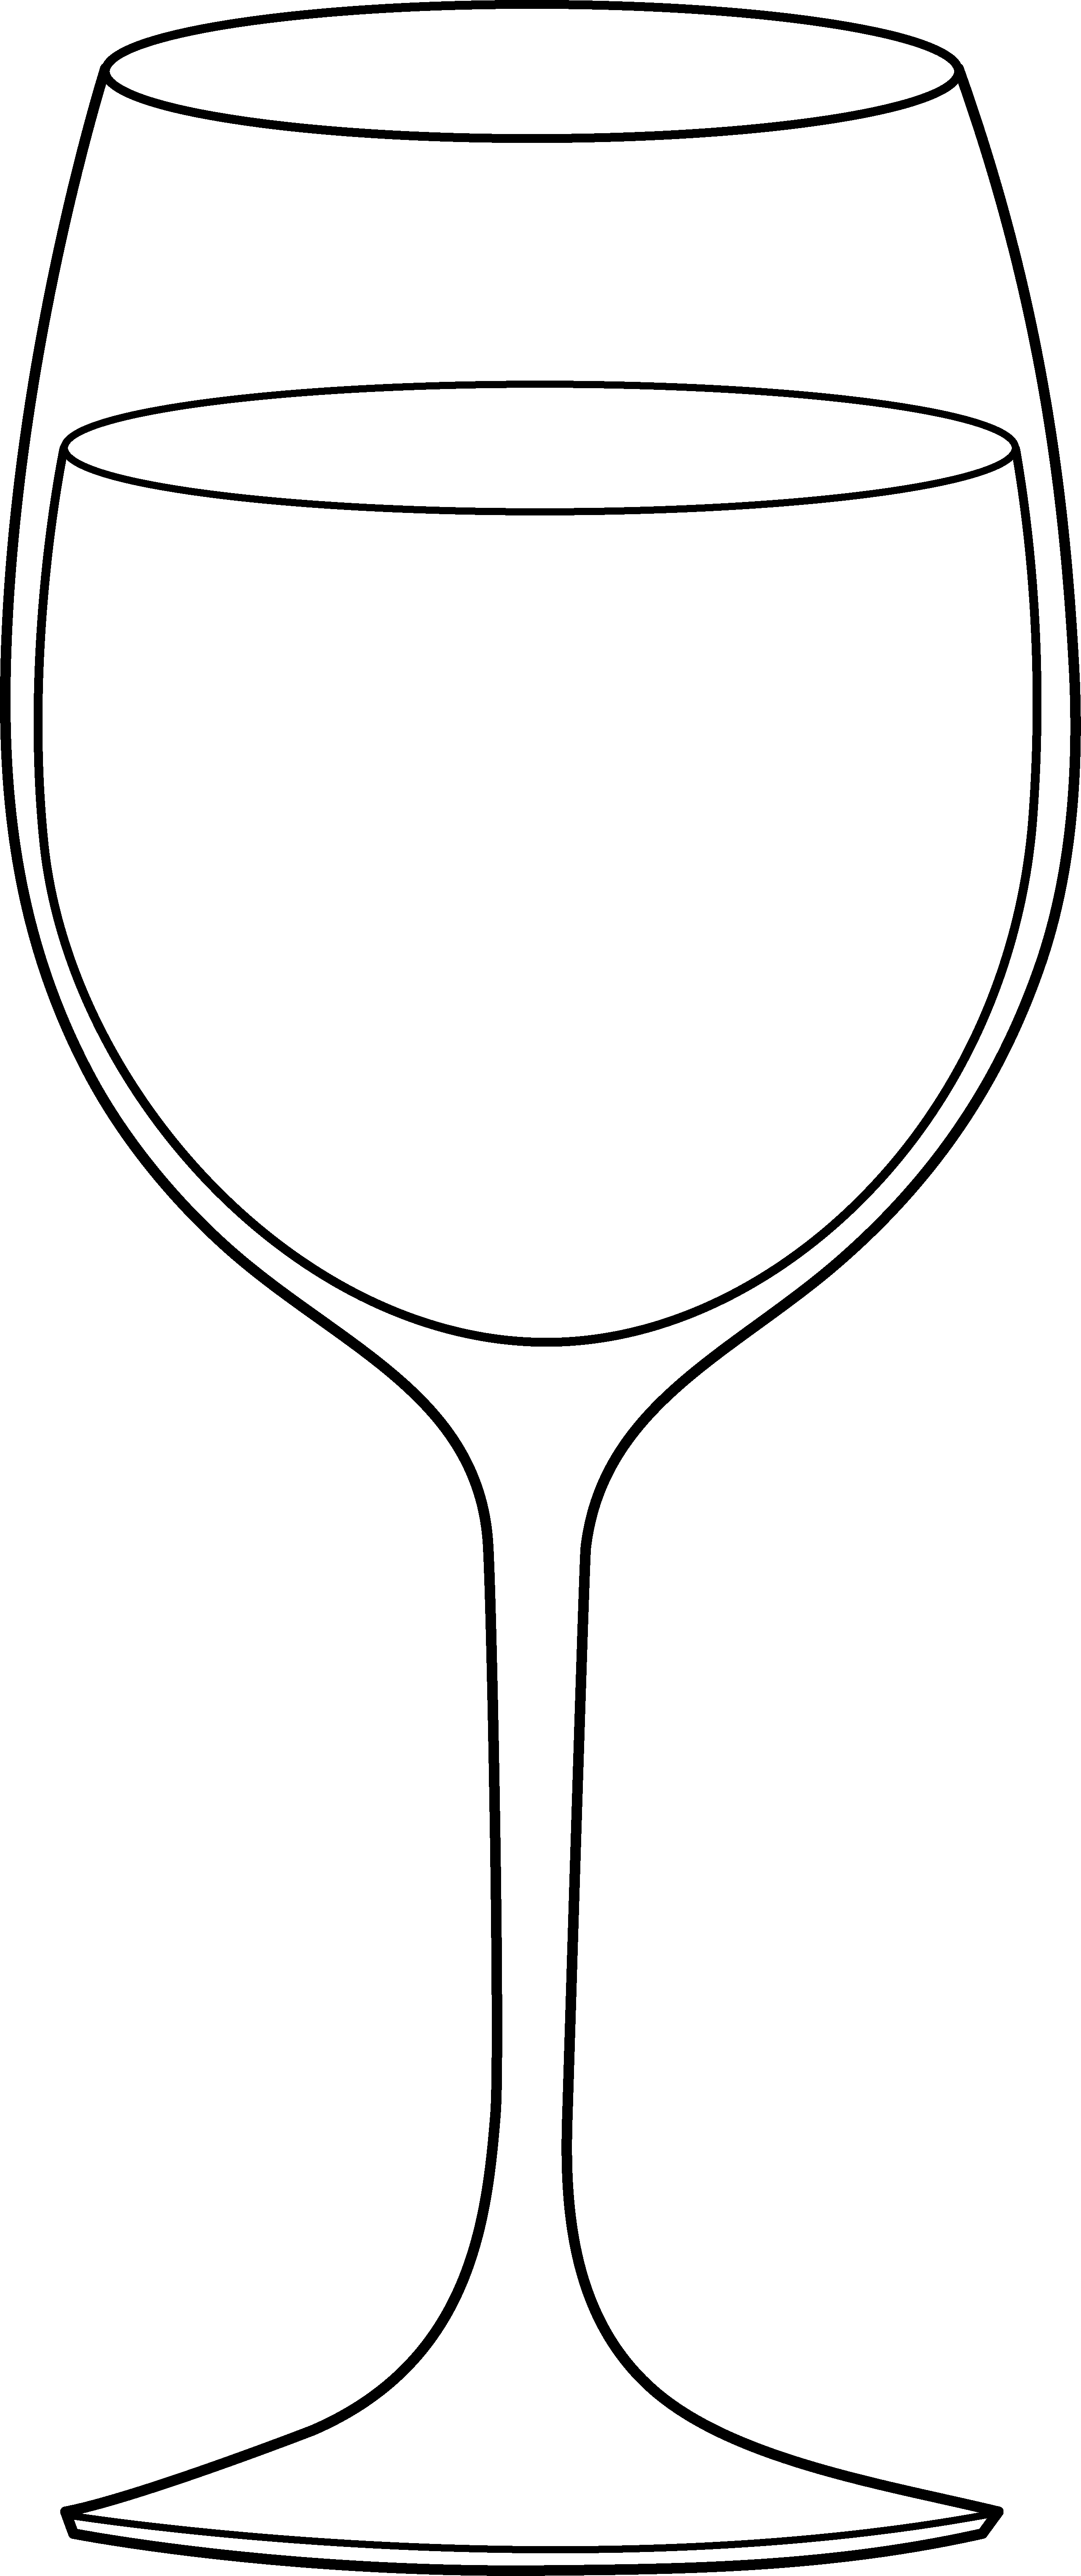 wine glass clip art free download - photo #42